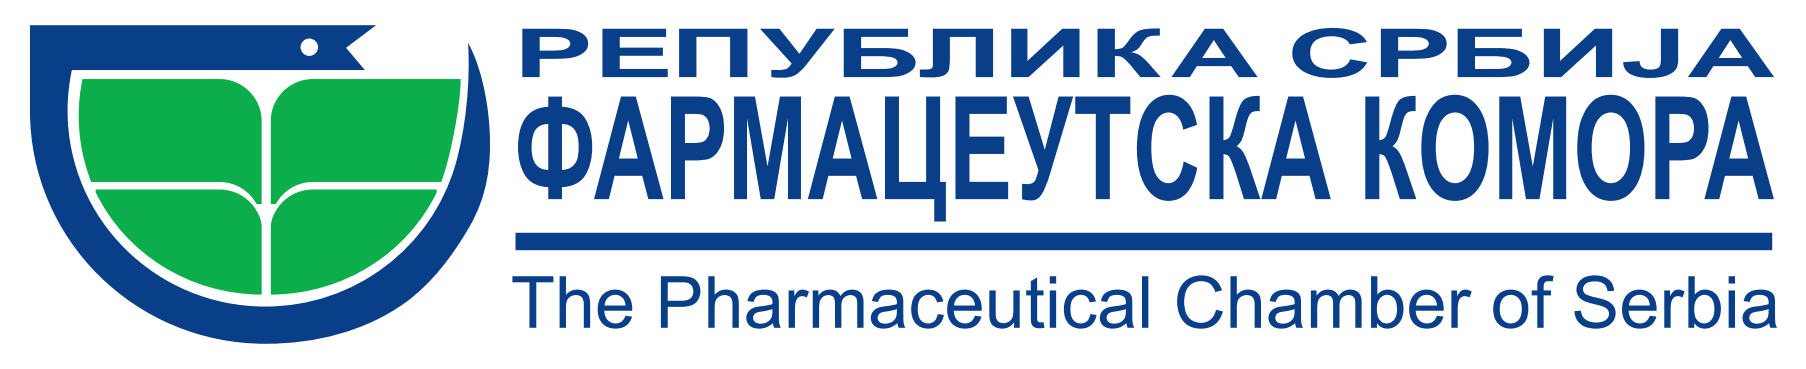 Farmaceutska komora Srbije logo